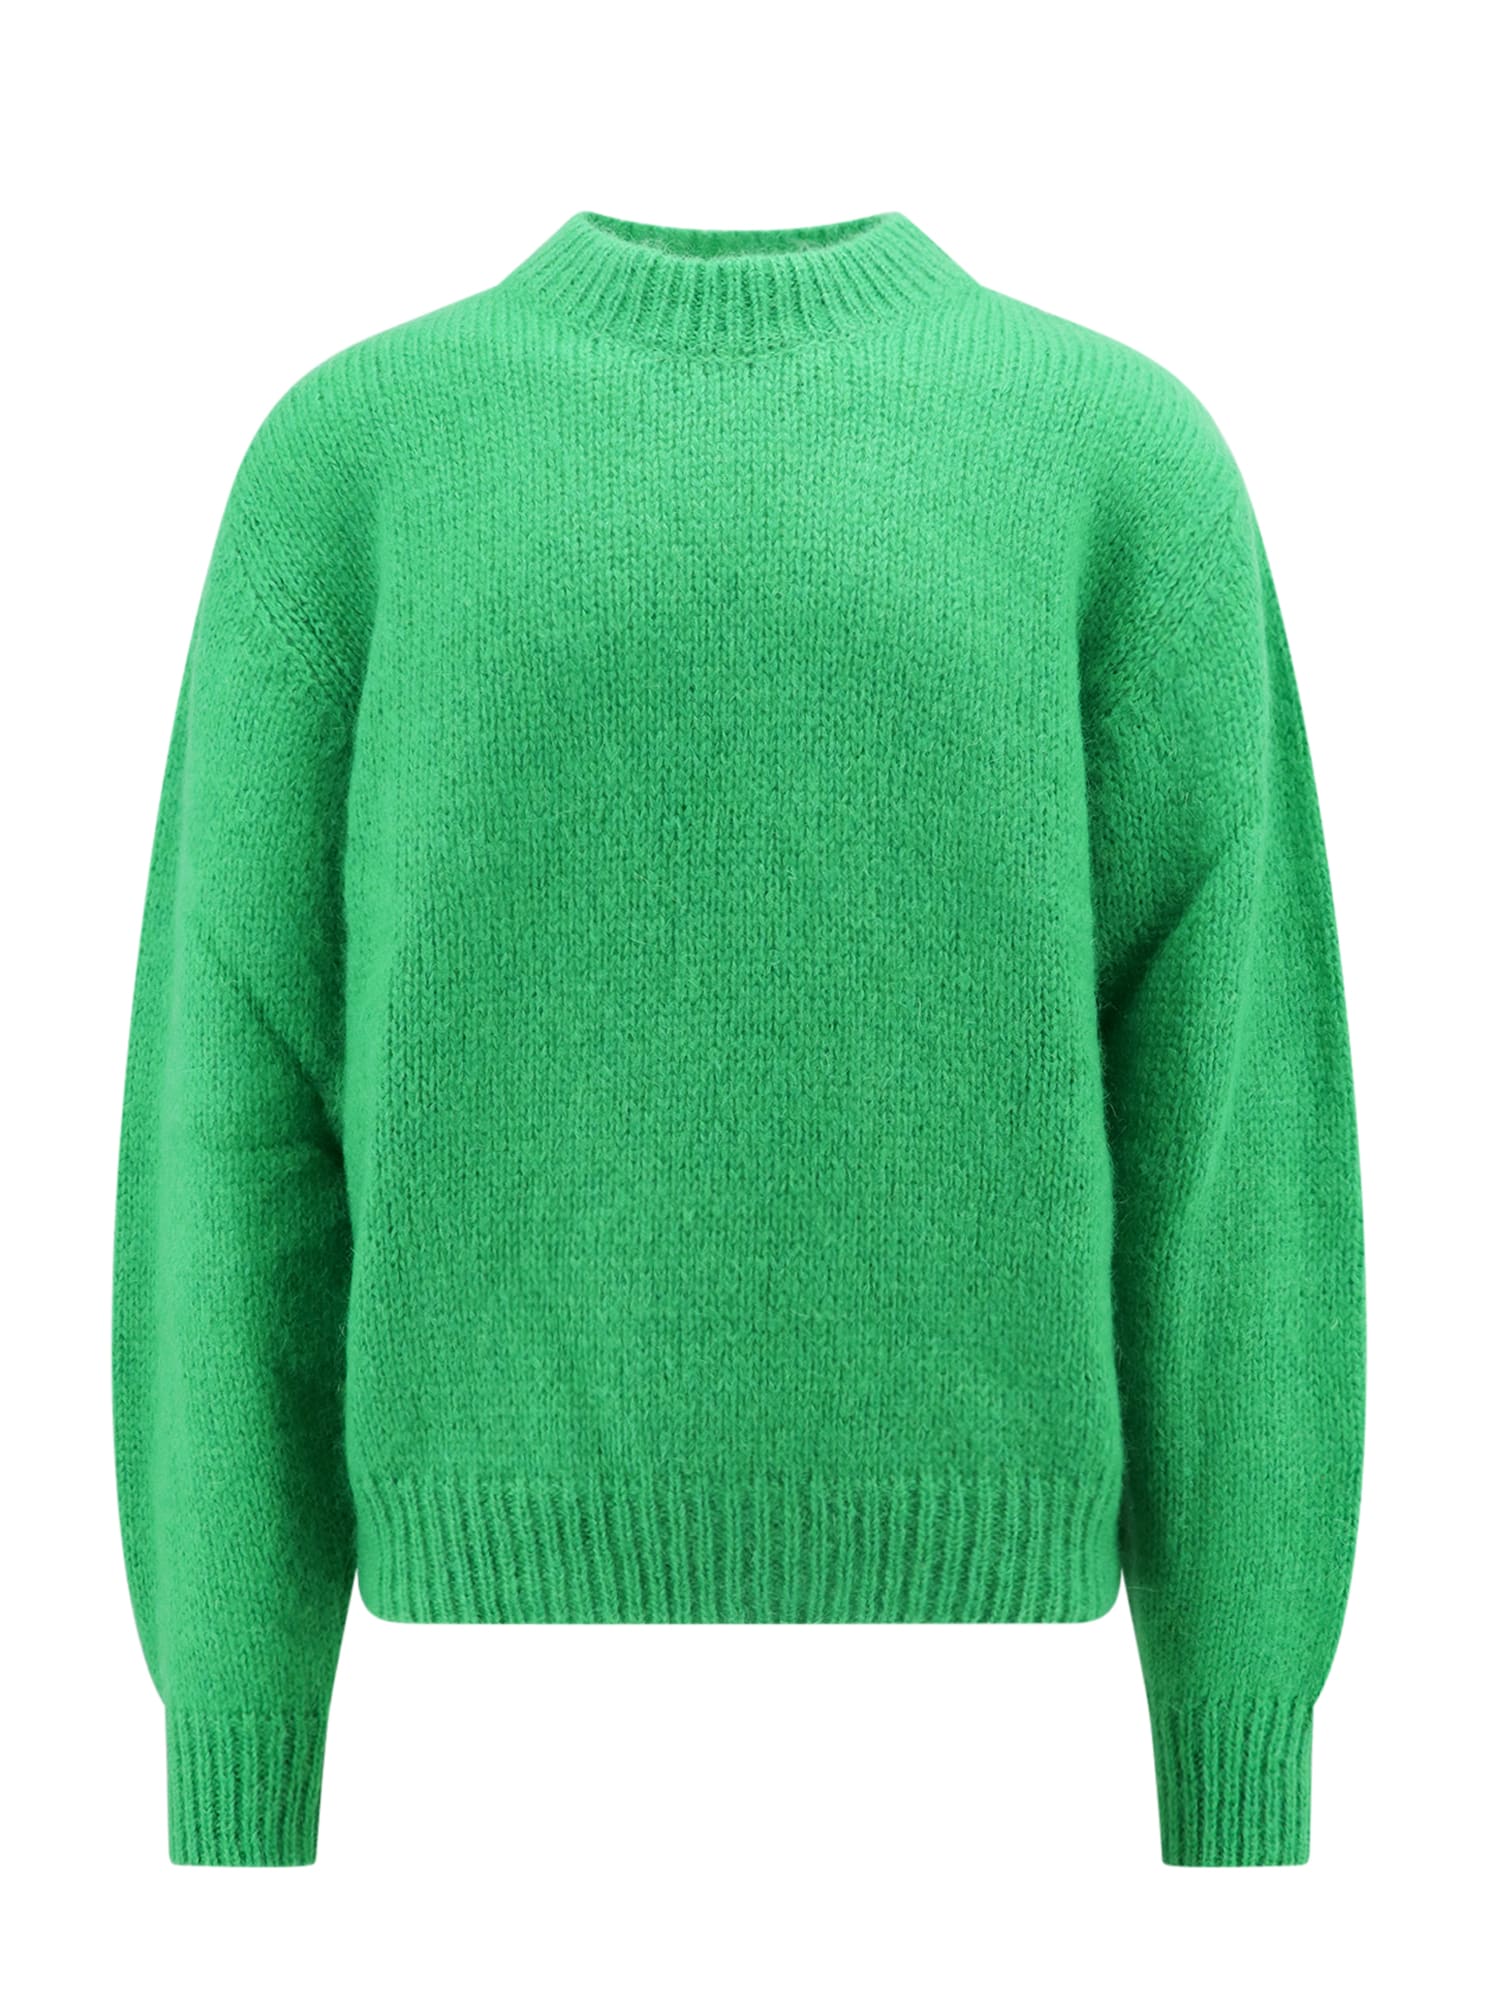 REPRESENT Sweater